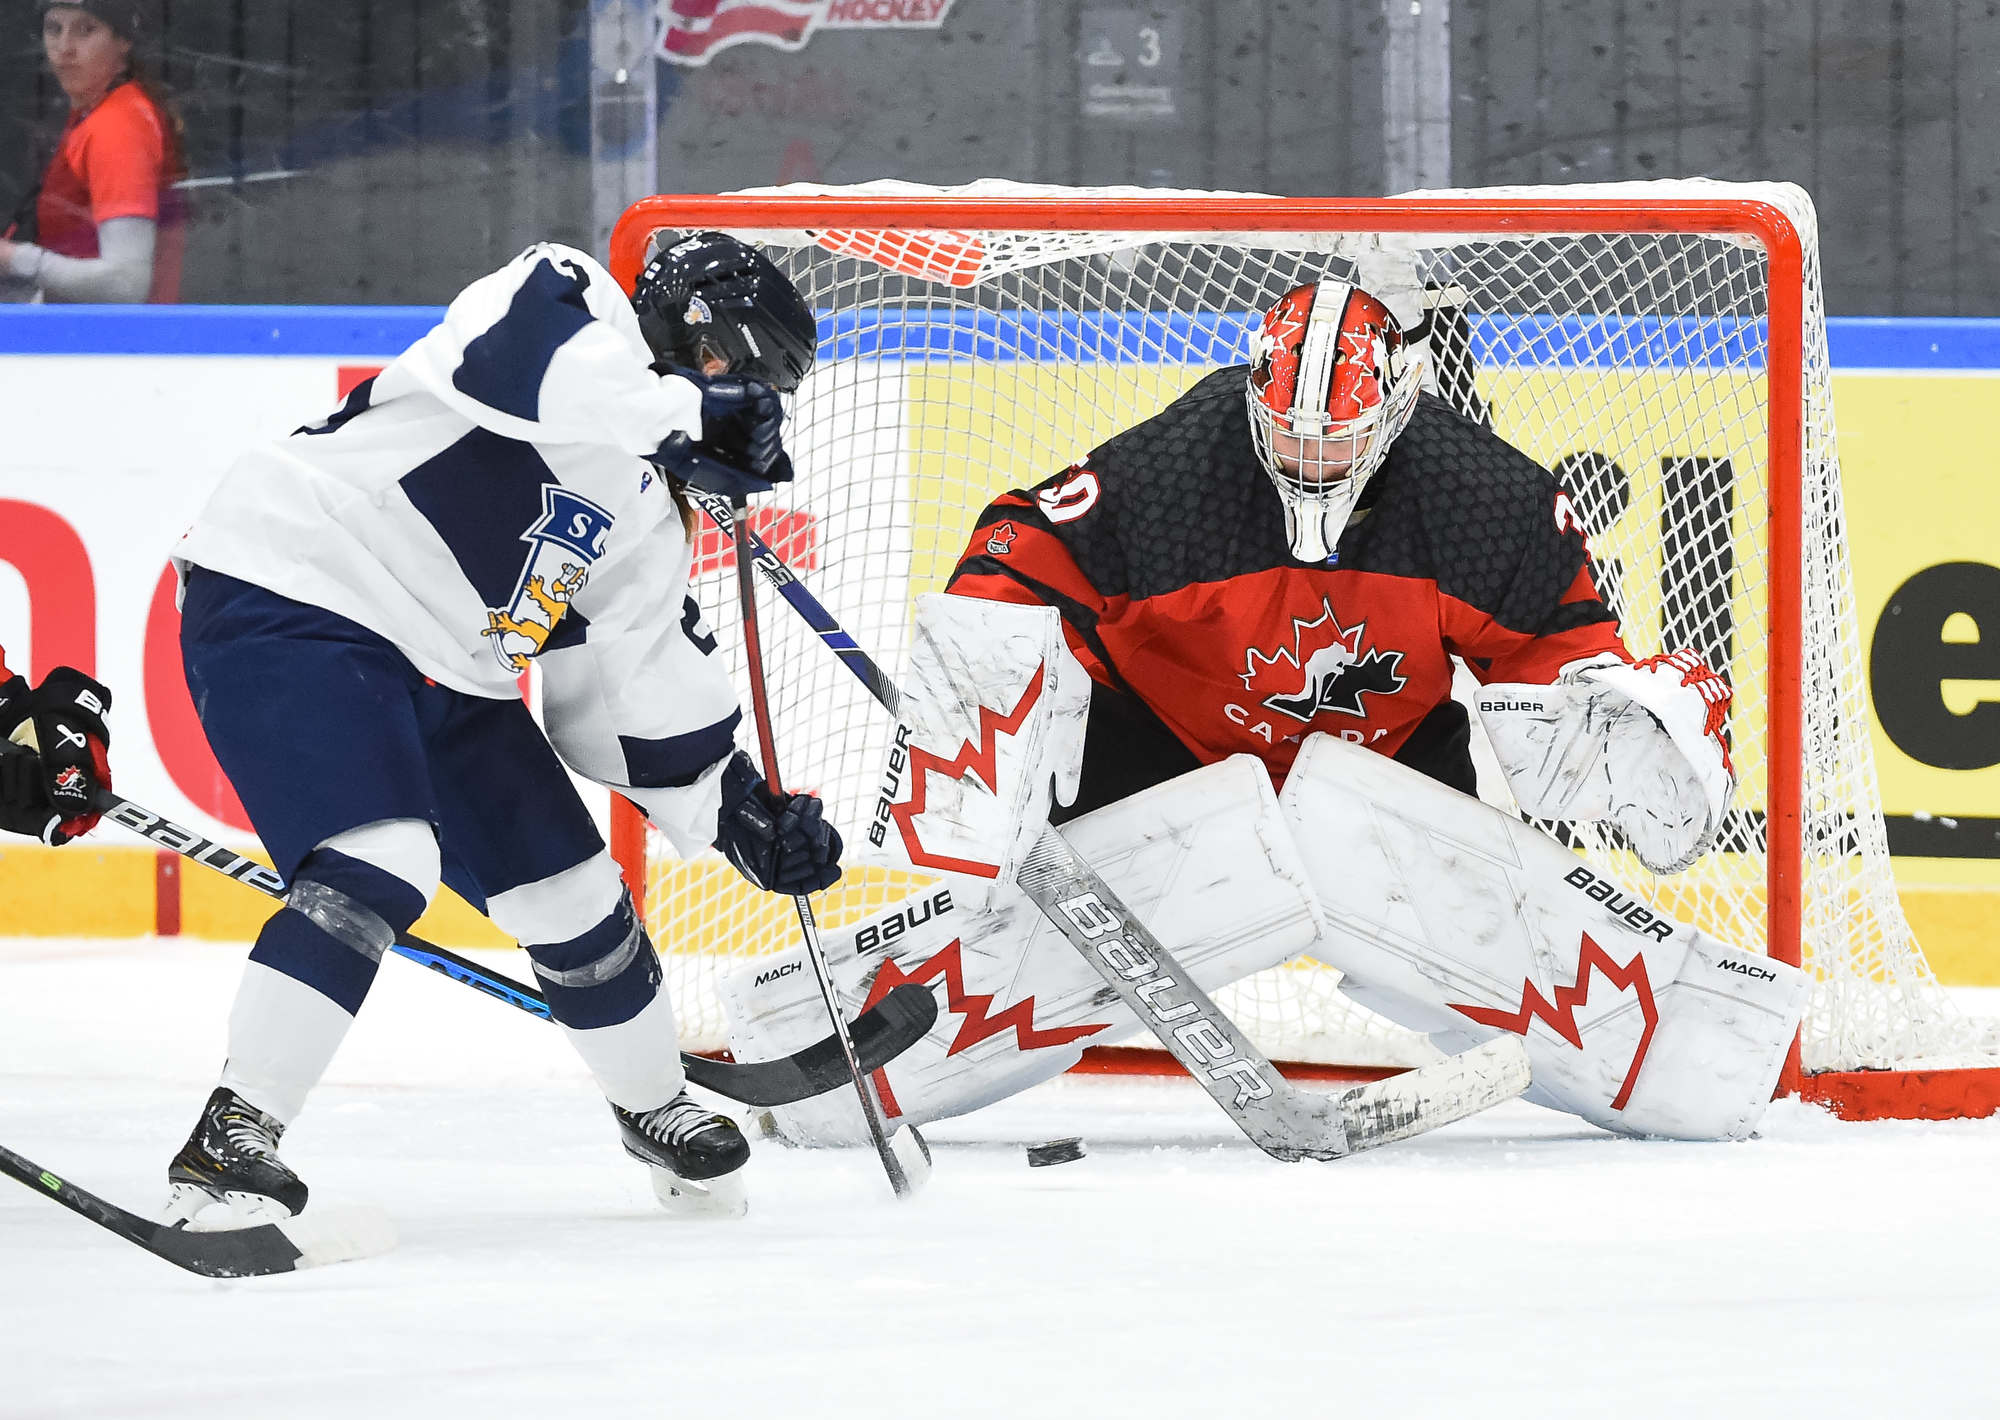 Team Canada sad after the match FINLAND - CANADA 6-5 (OT) IIHF U18